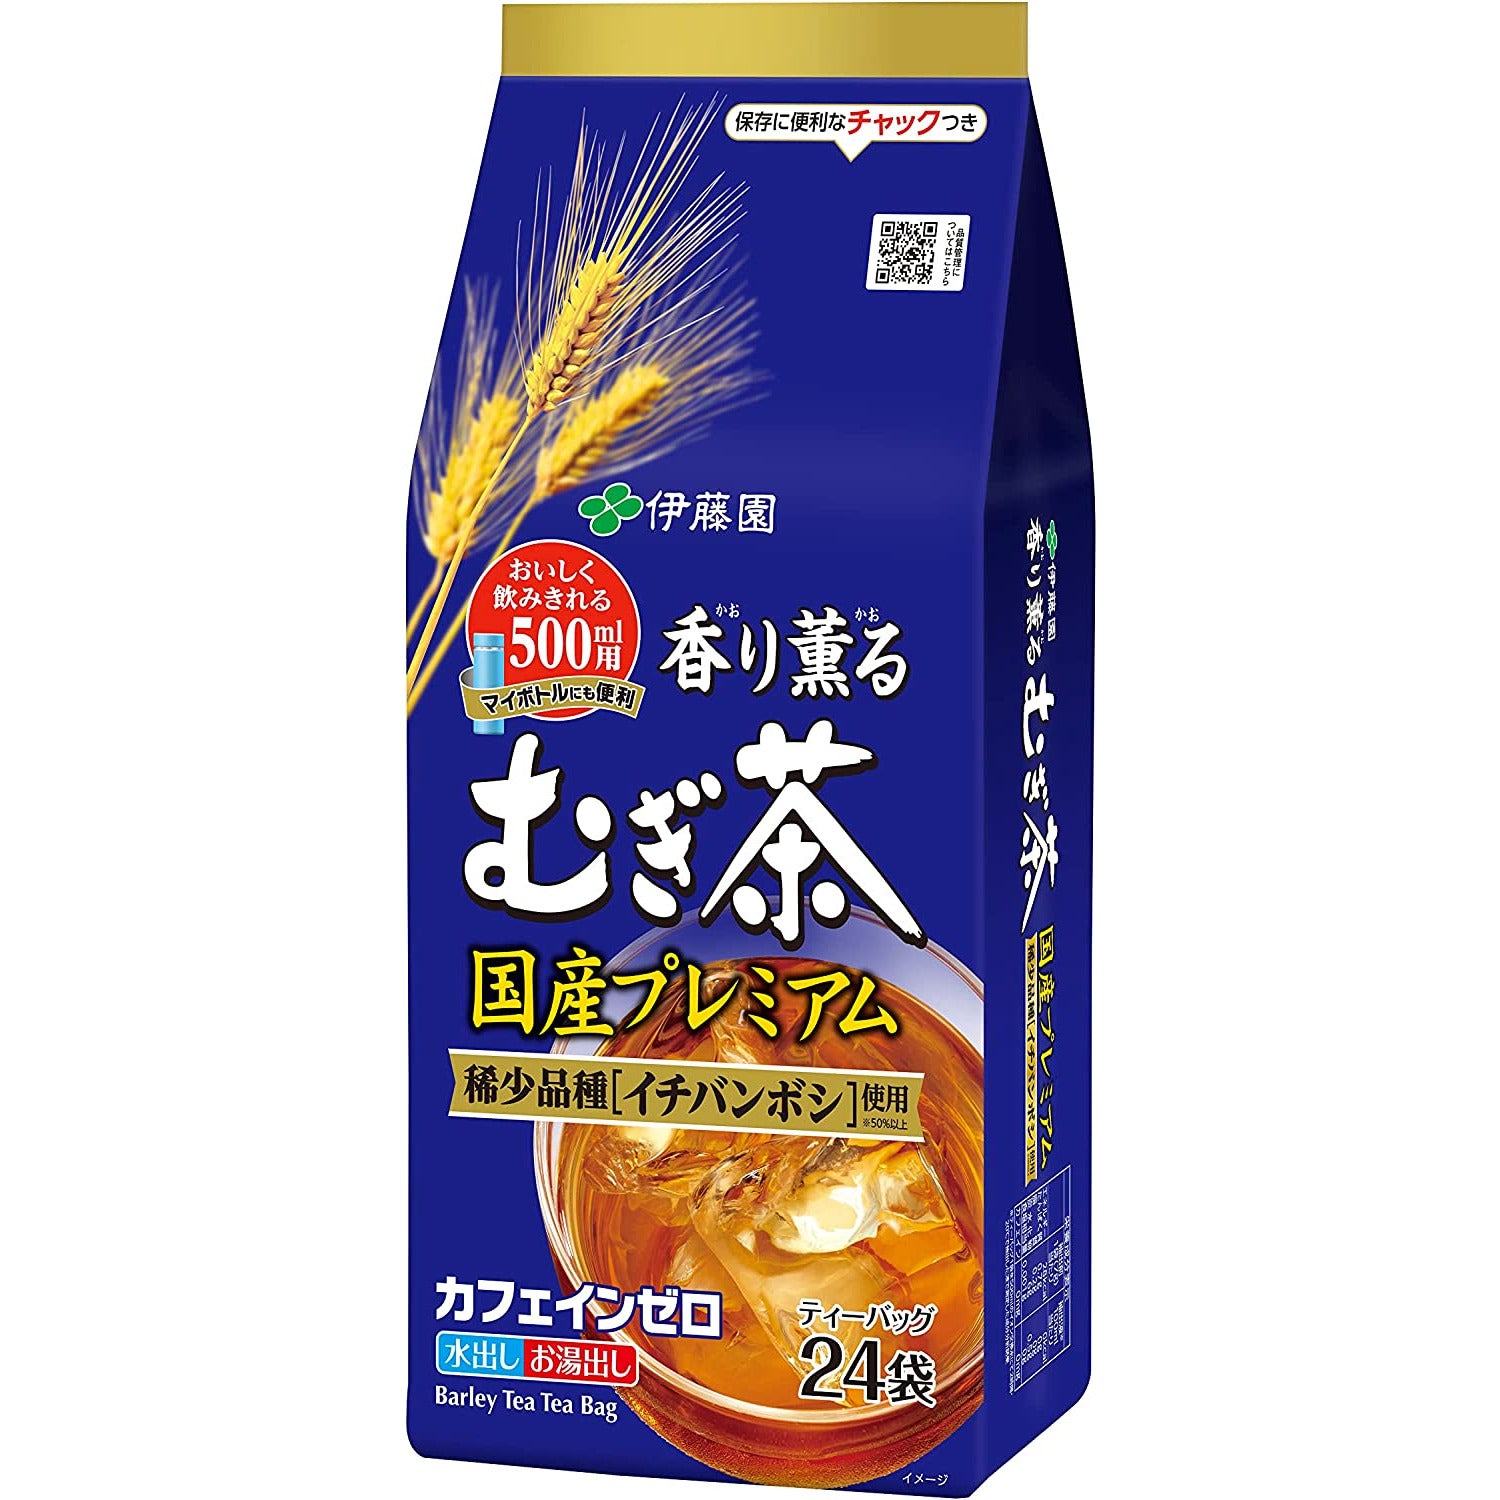 Itoen Fragrant barley tea Domestic premium tea bag 7g x 24 bags